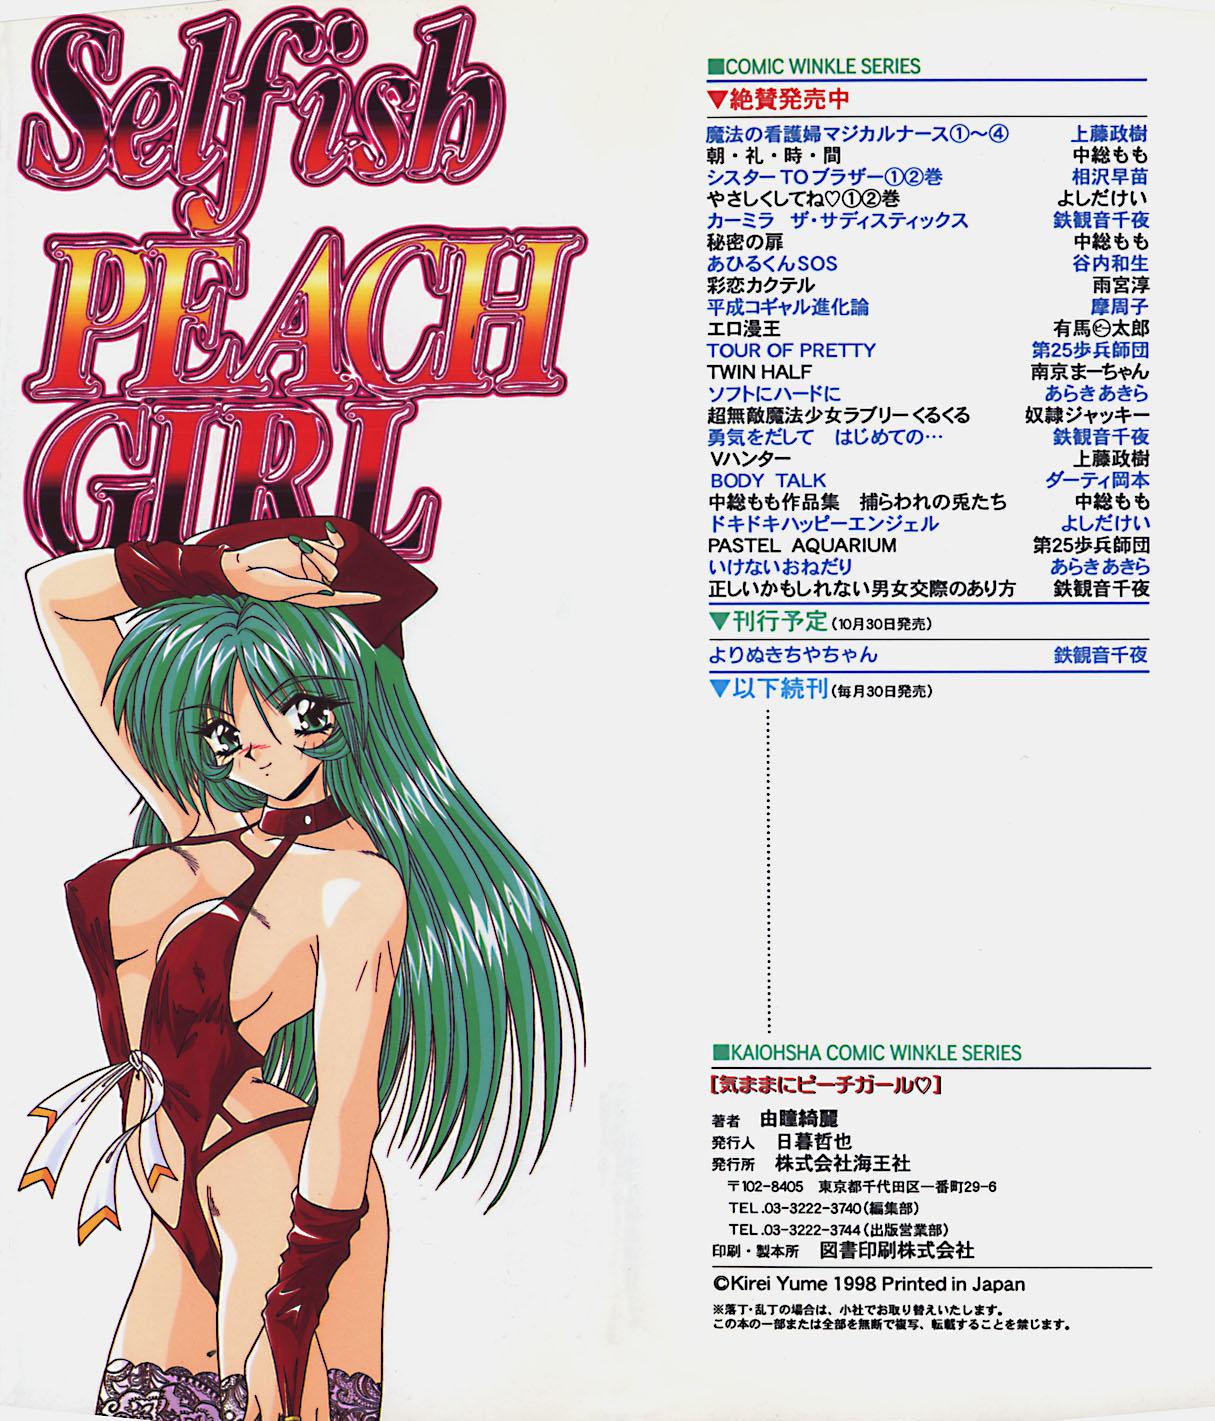 Double Penetration Kimama ni Peach Girl - Selfish Peach Girl Pink - Page 3